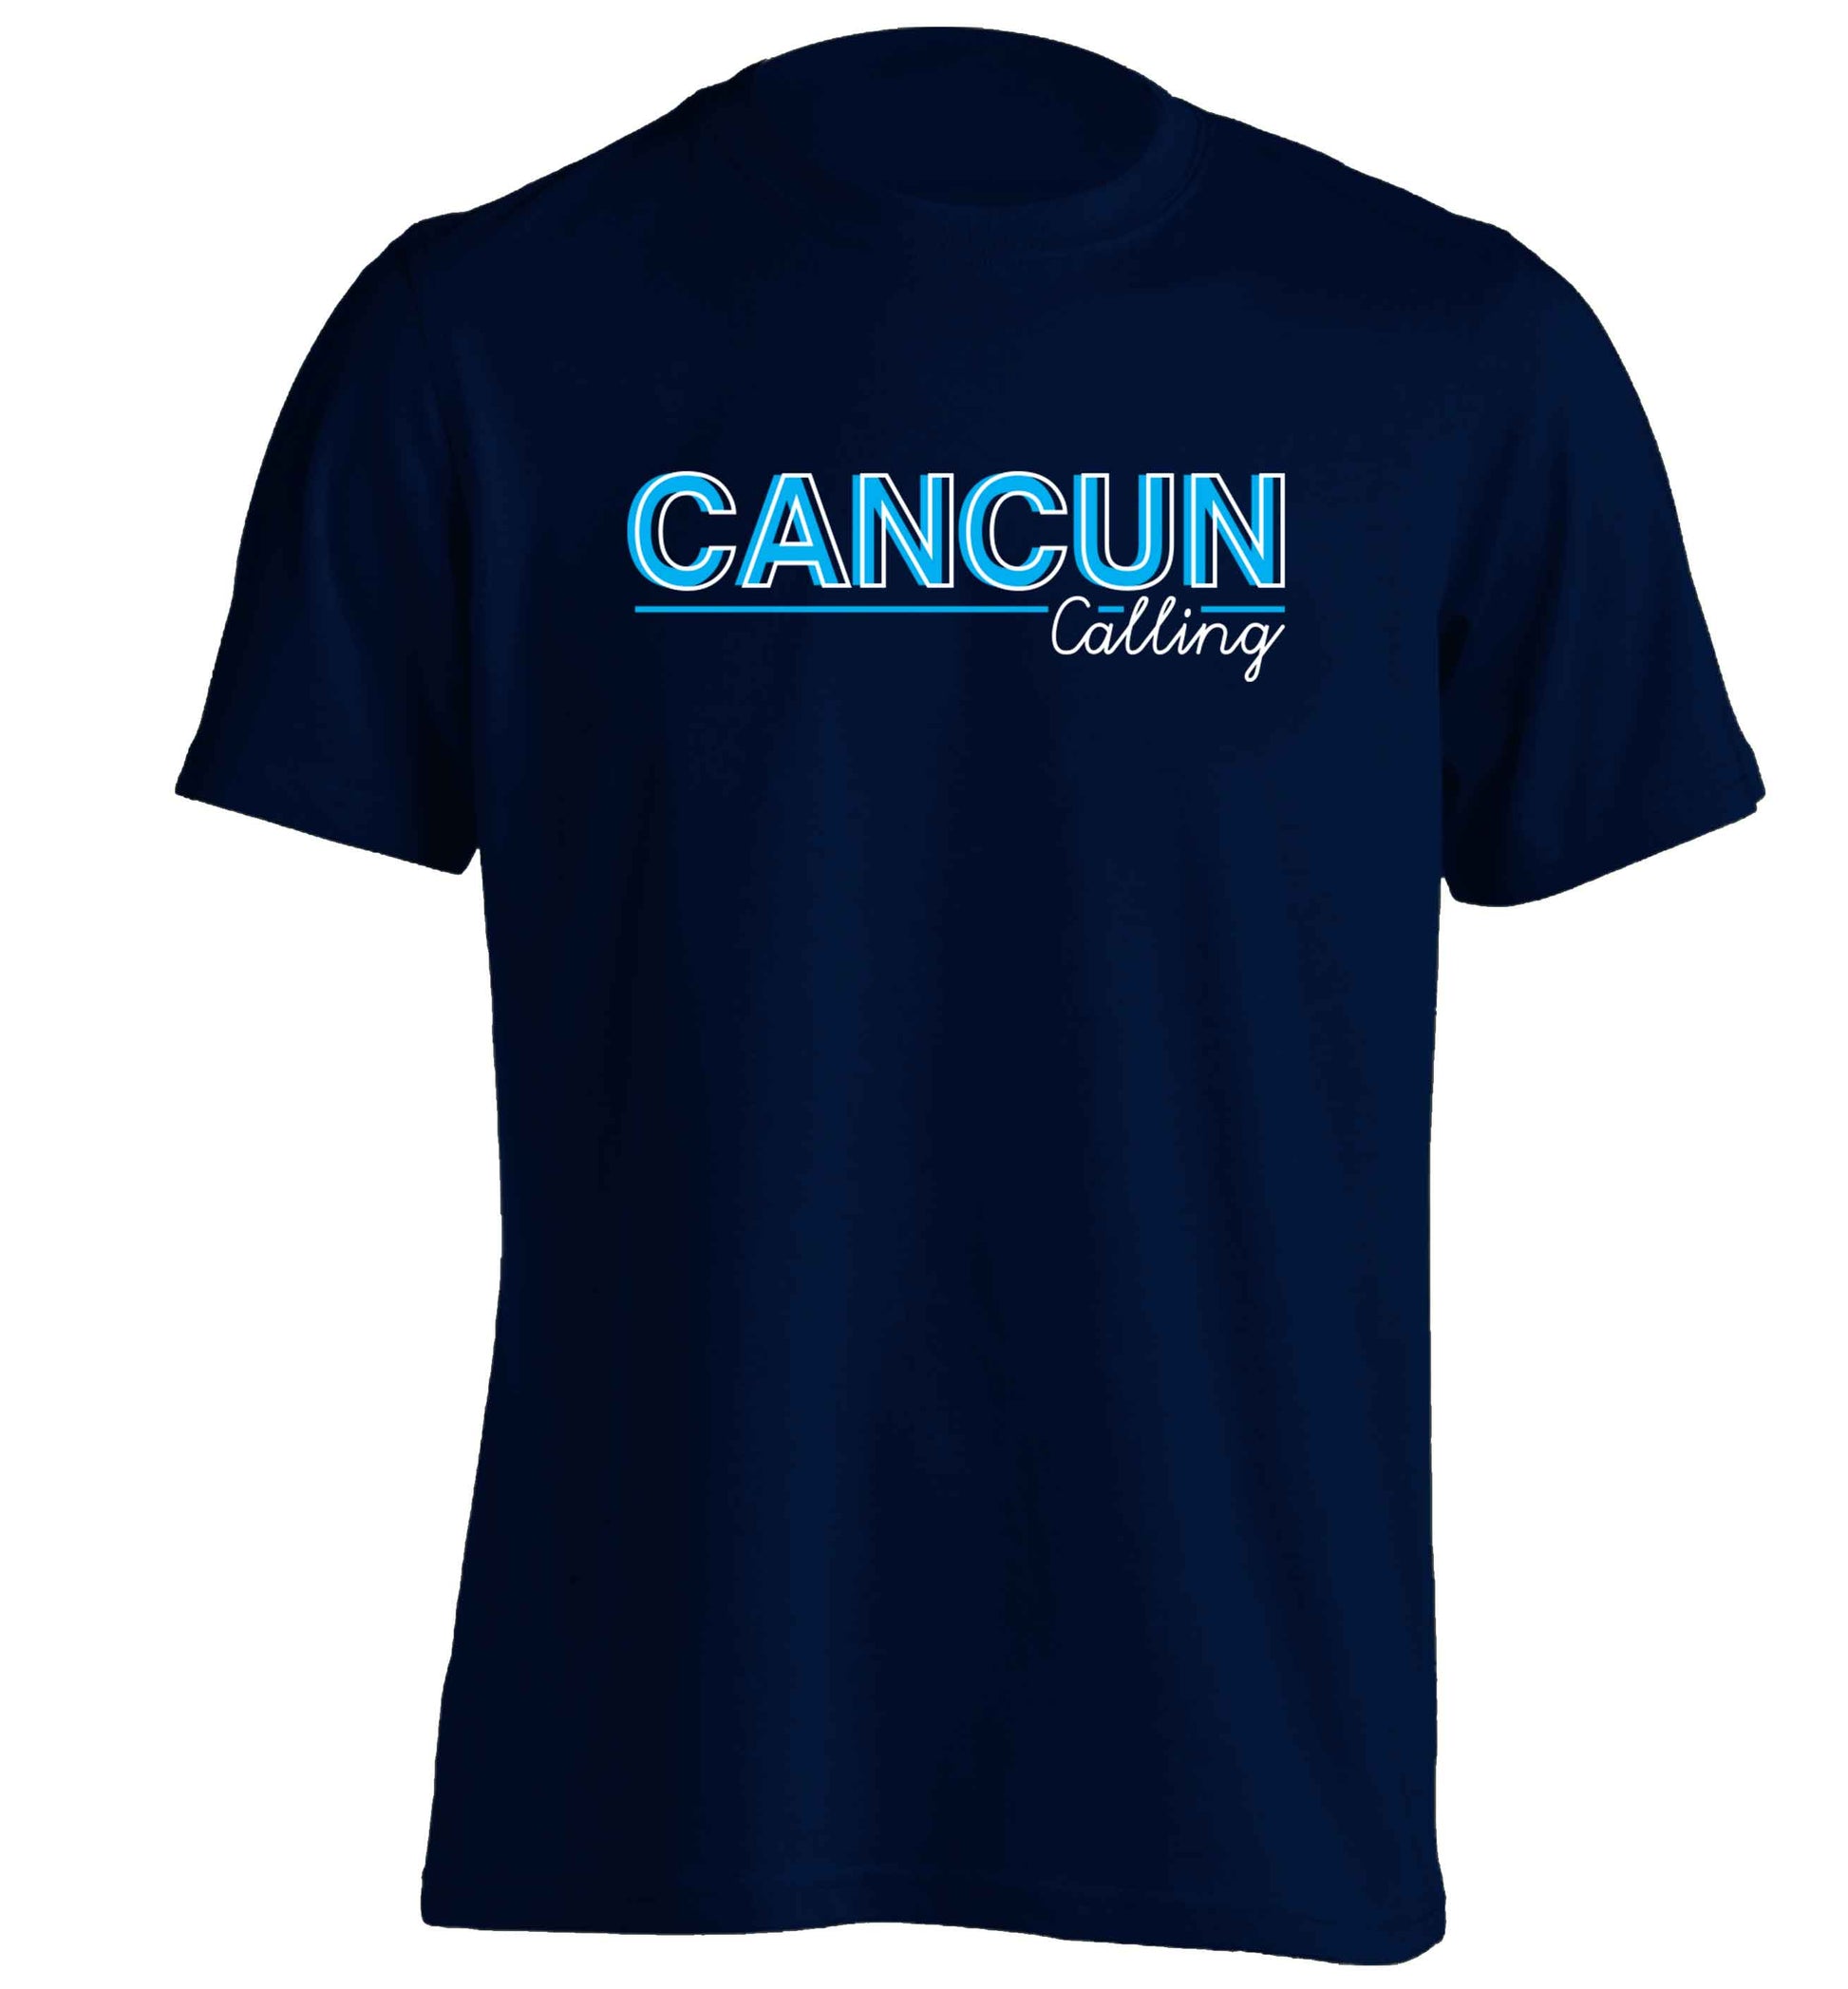 Cancun calling adults unisex navy Tshirt 2XL